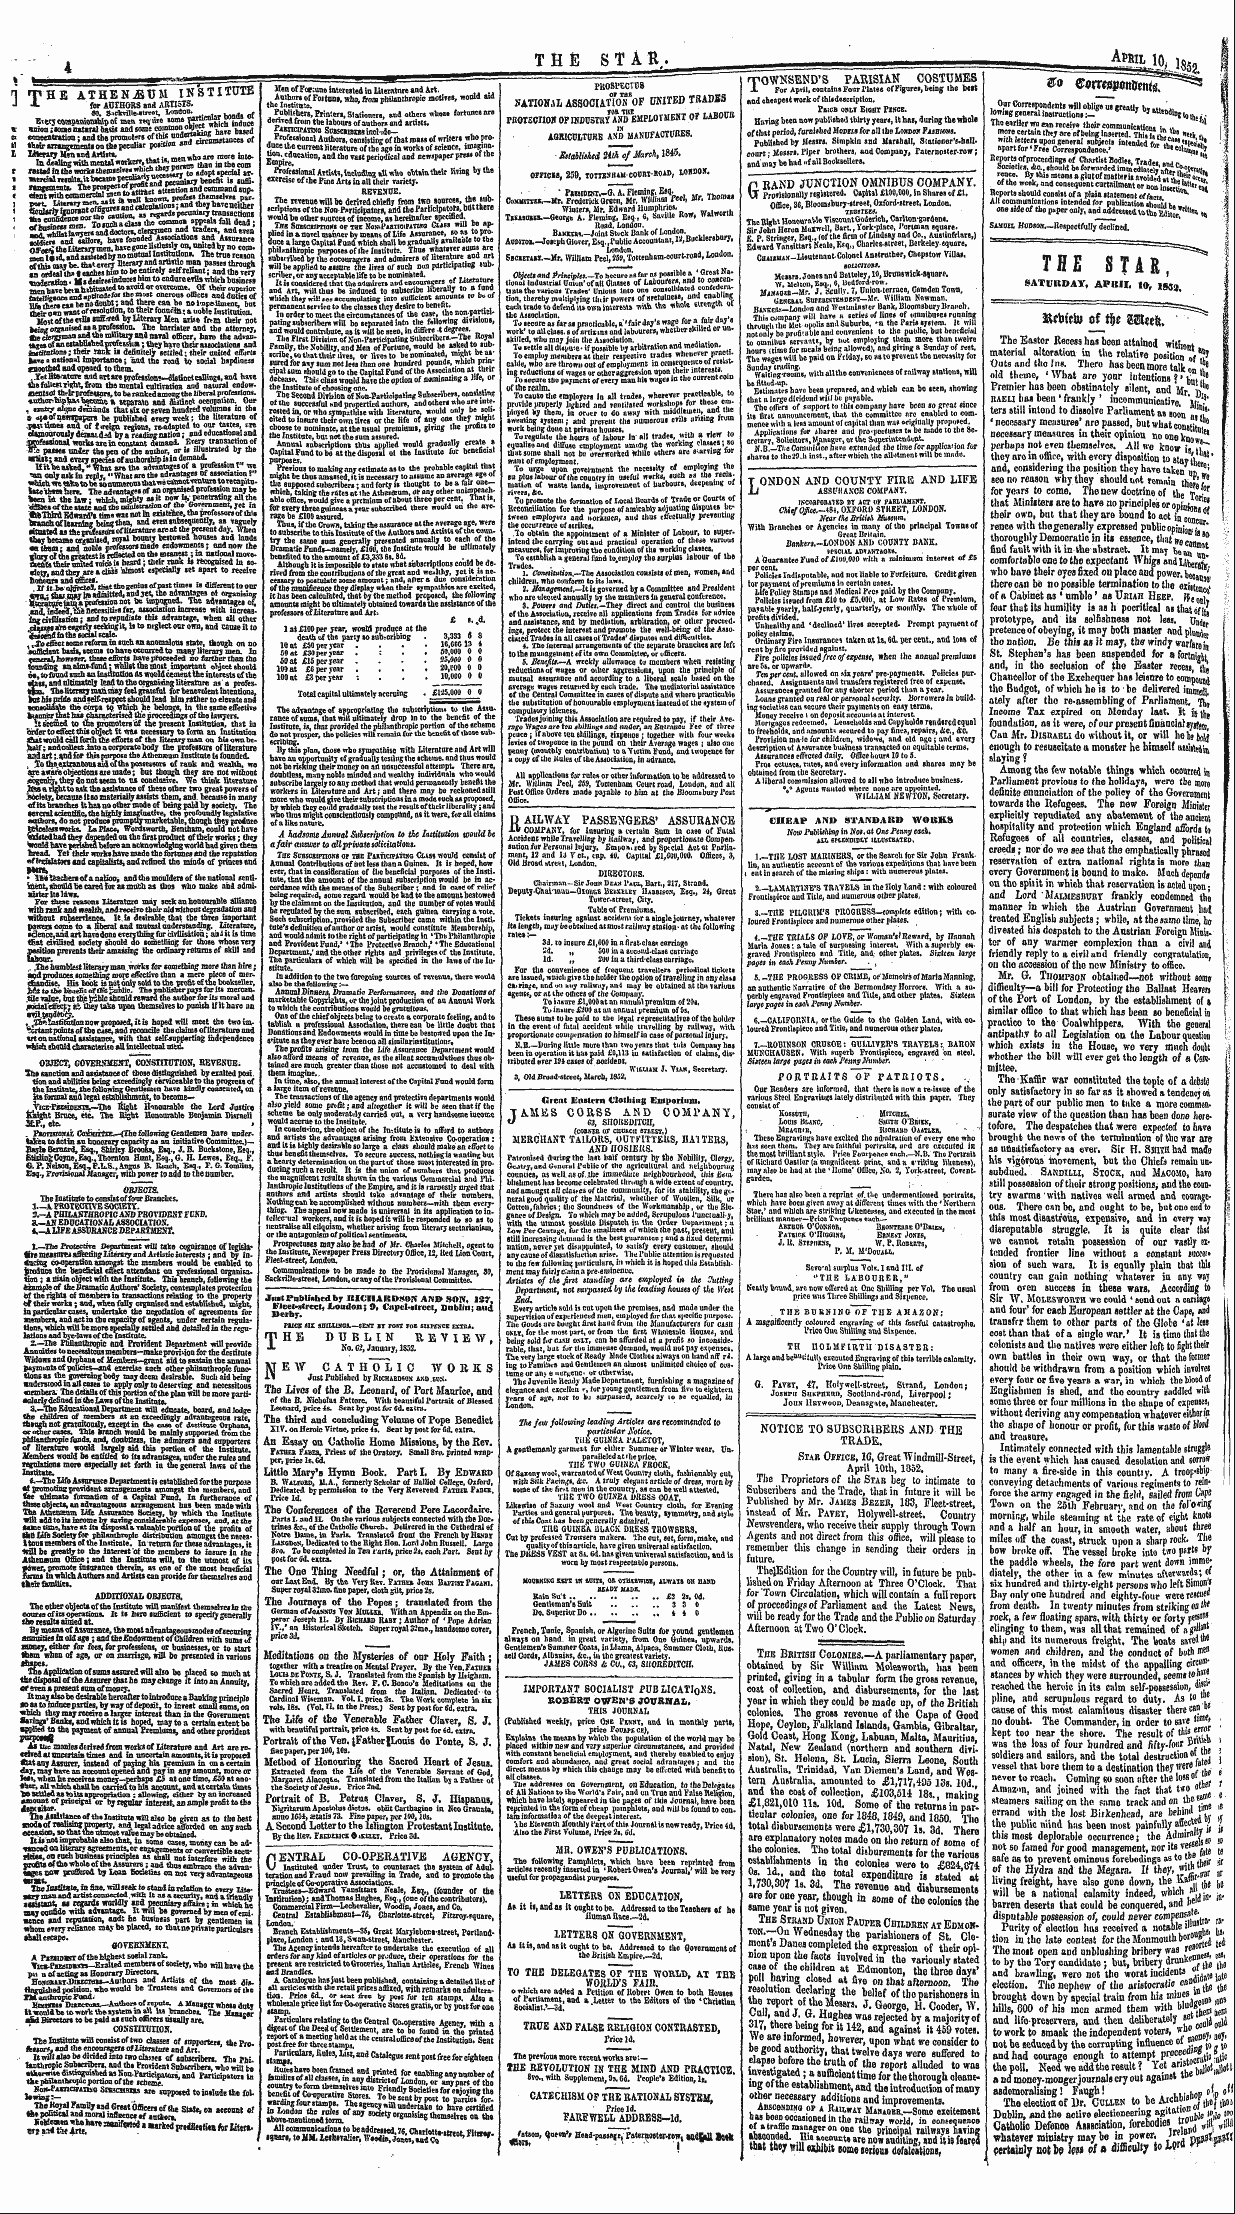 Northern Star (1837-1852): jS F Y, 2nd edition - M Eorrwpjtdfotts